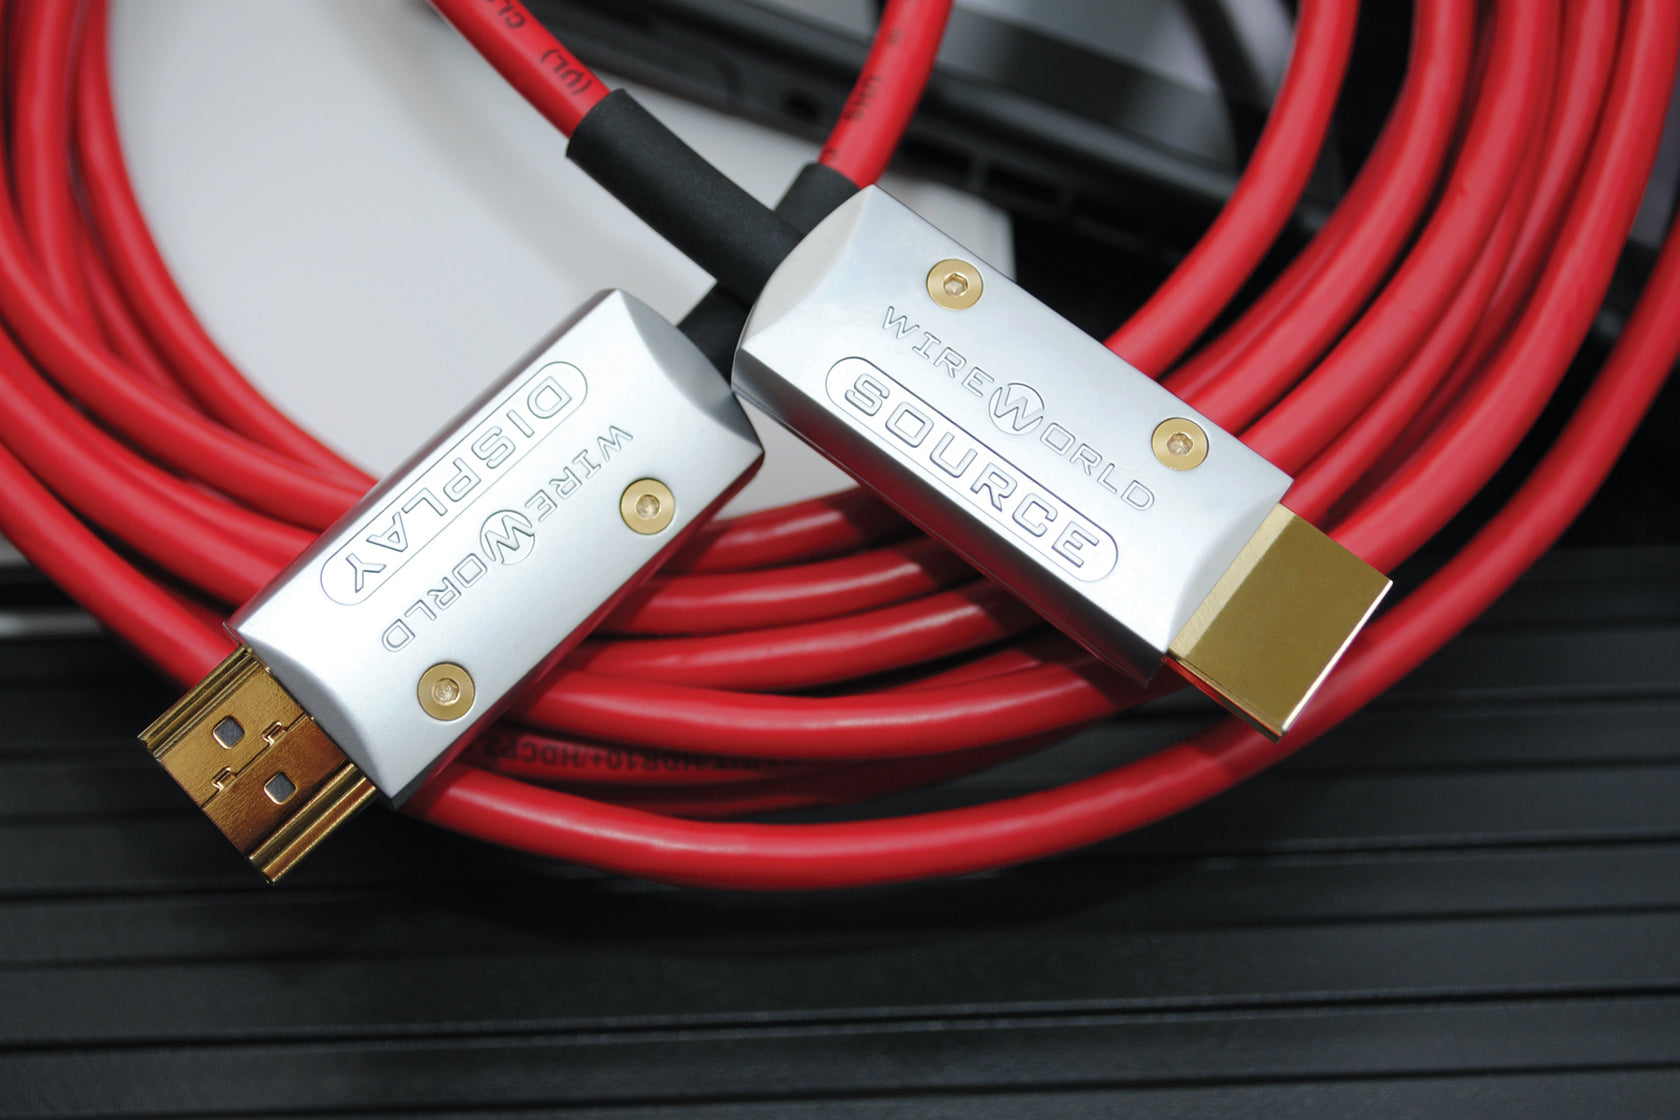 HDMI-3M - HDMI cable 3 meters : Buy Online at Best Price in KSA